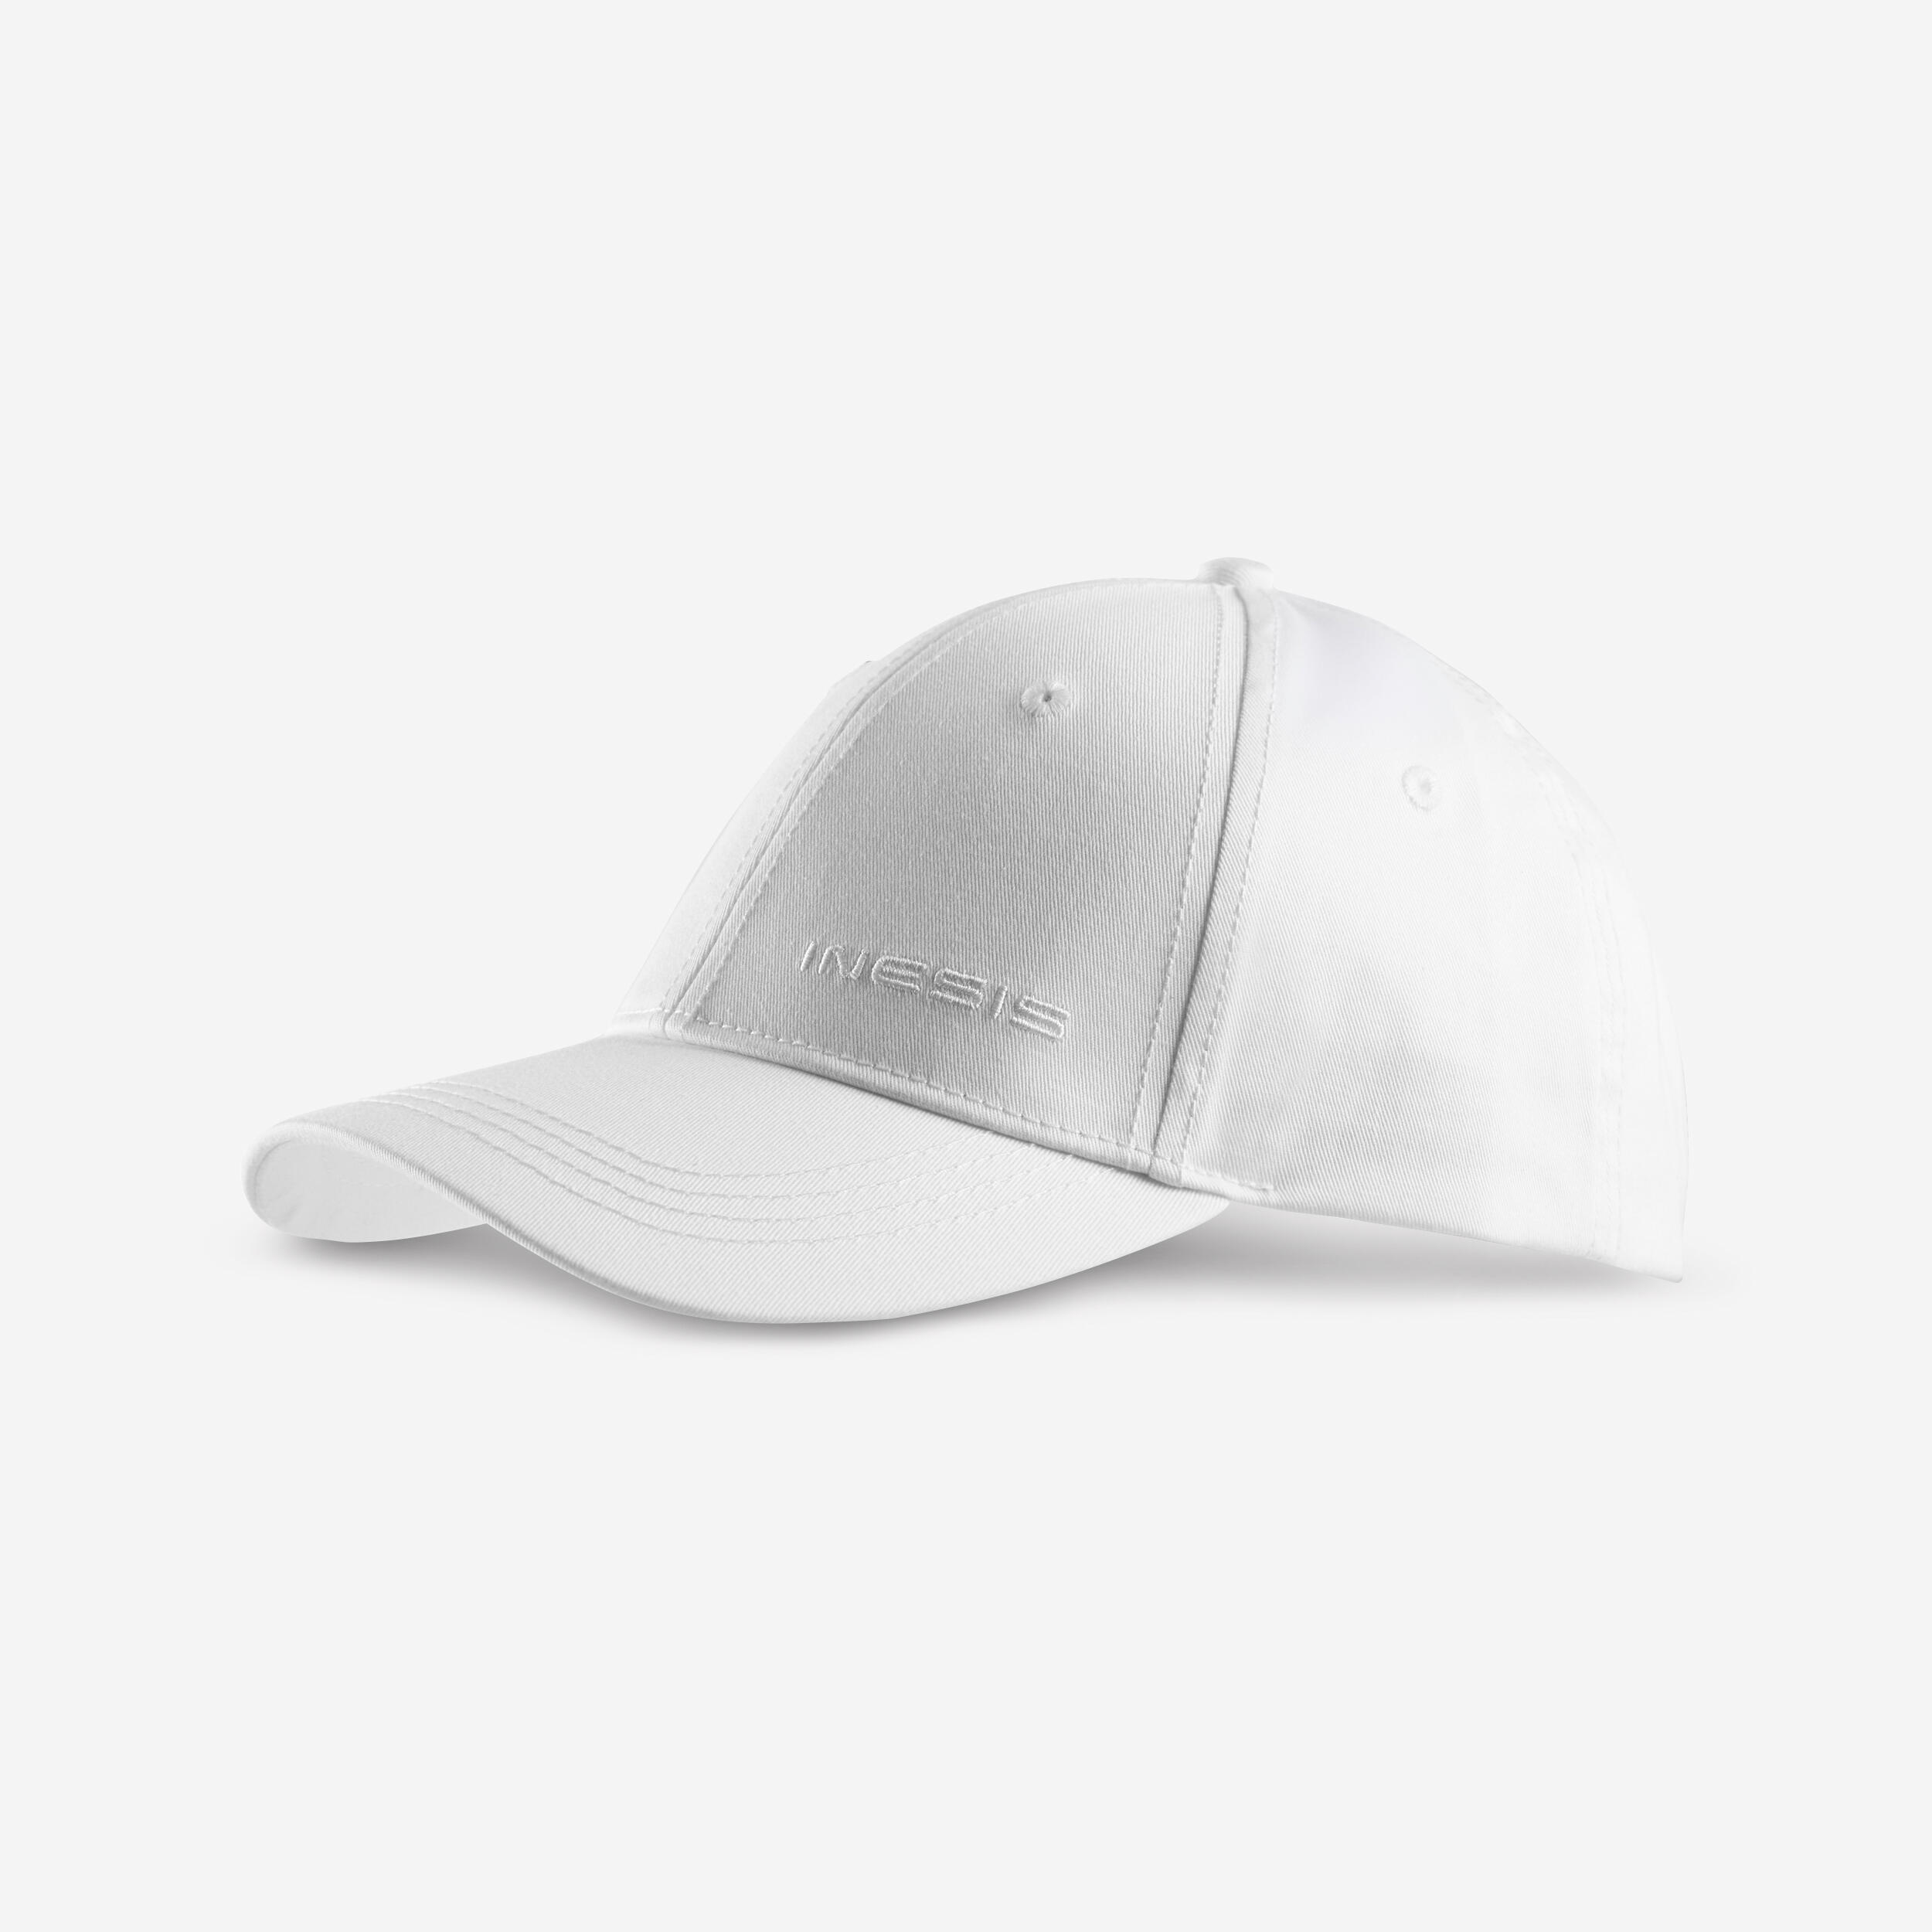 INESIS Adults' Golf Cap - MW 500 White